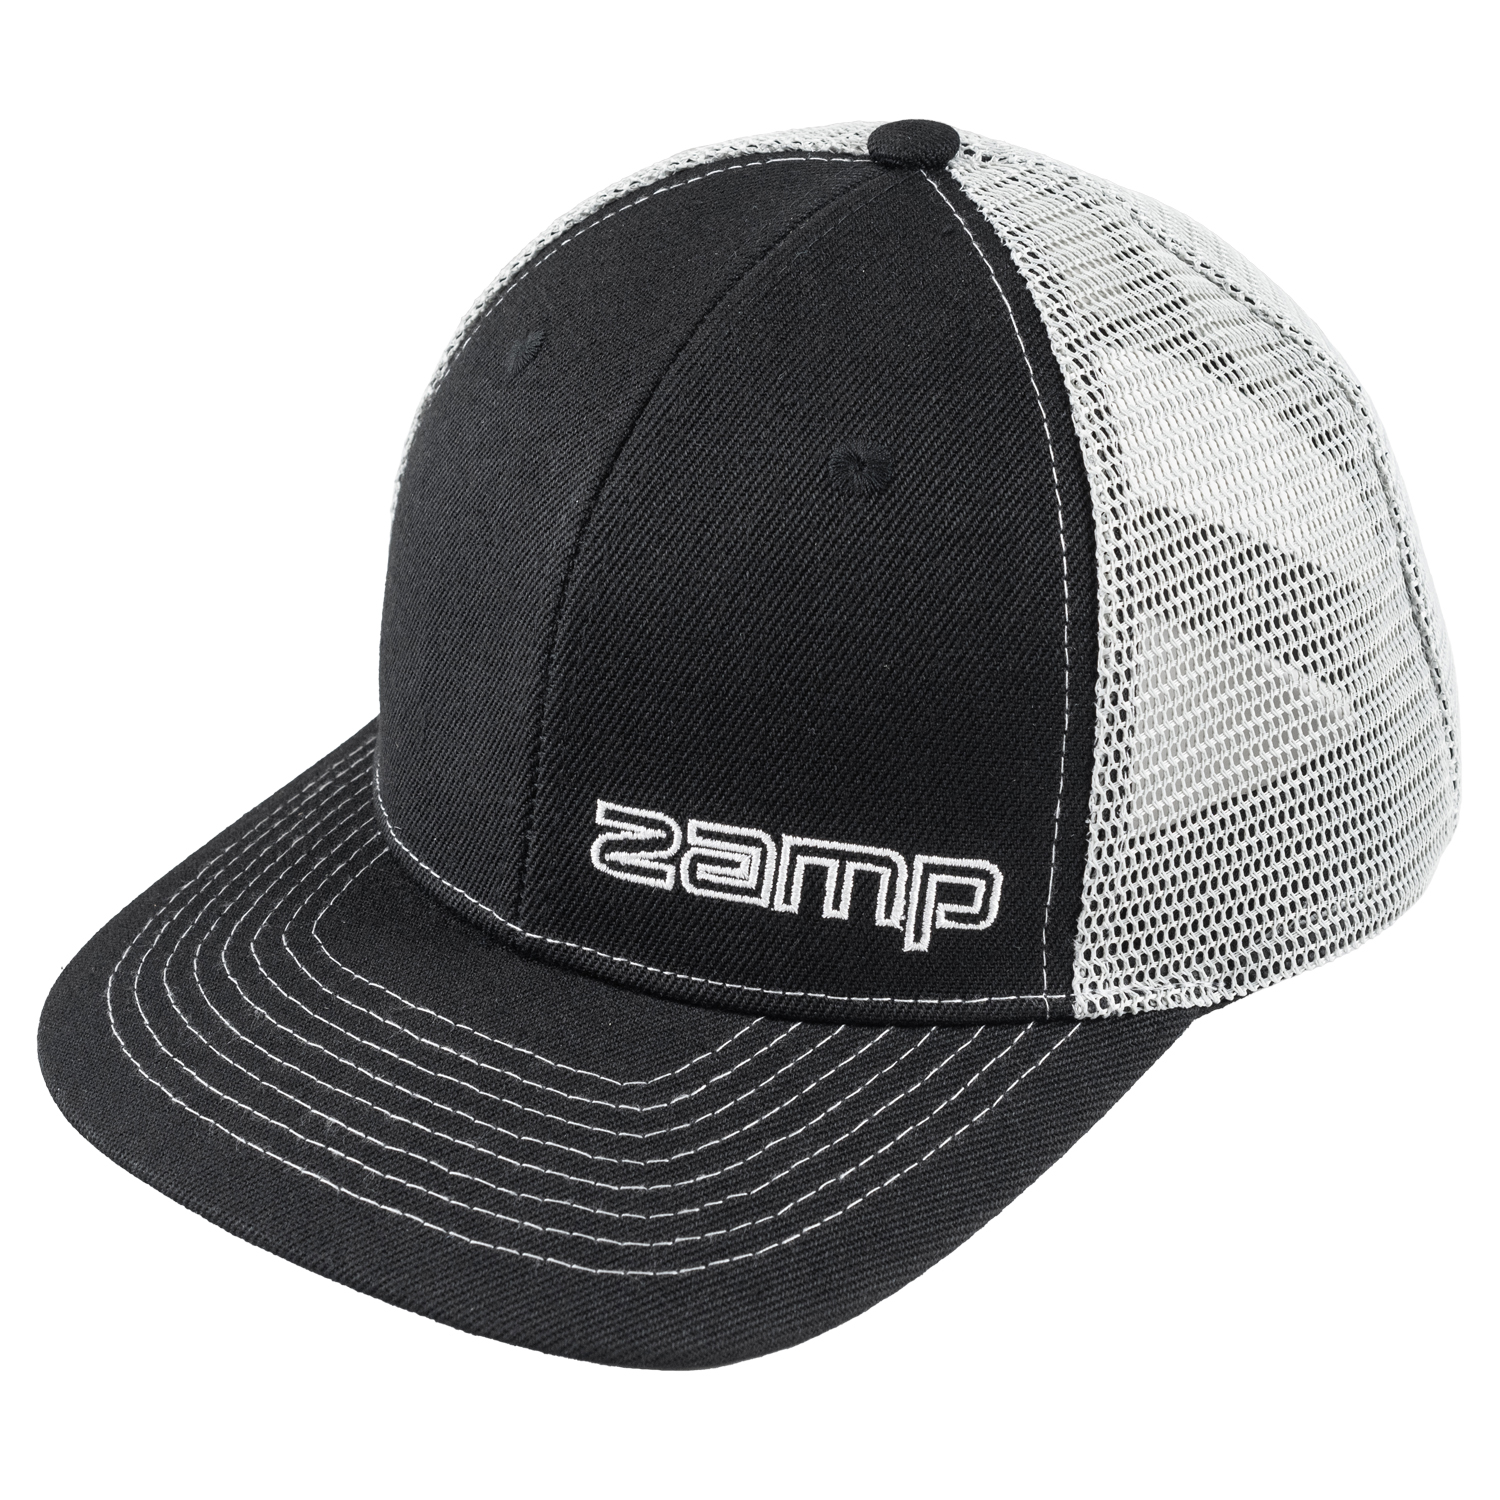 Zamp Hat